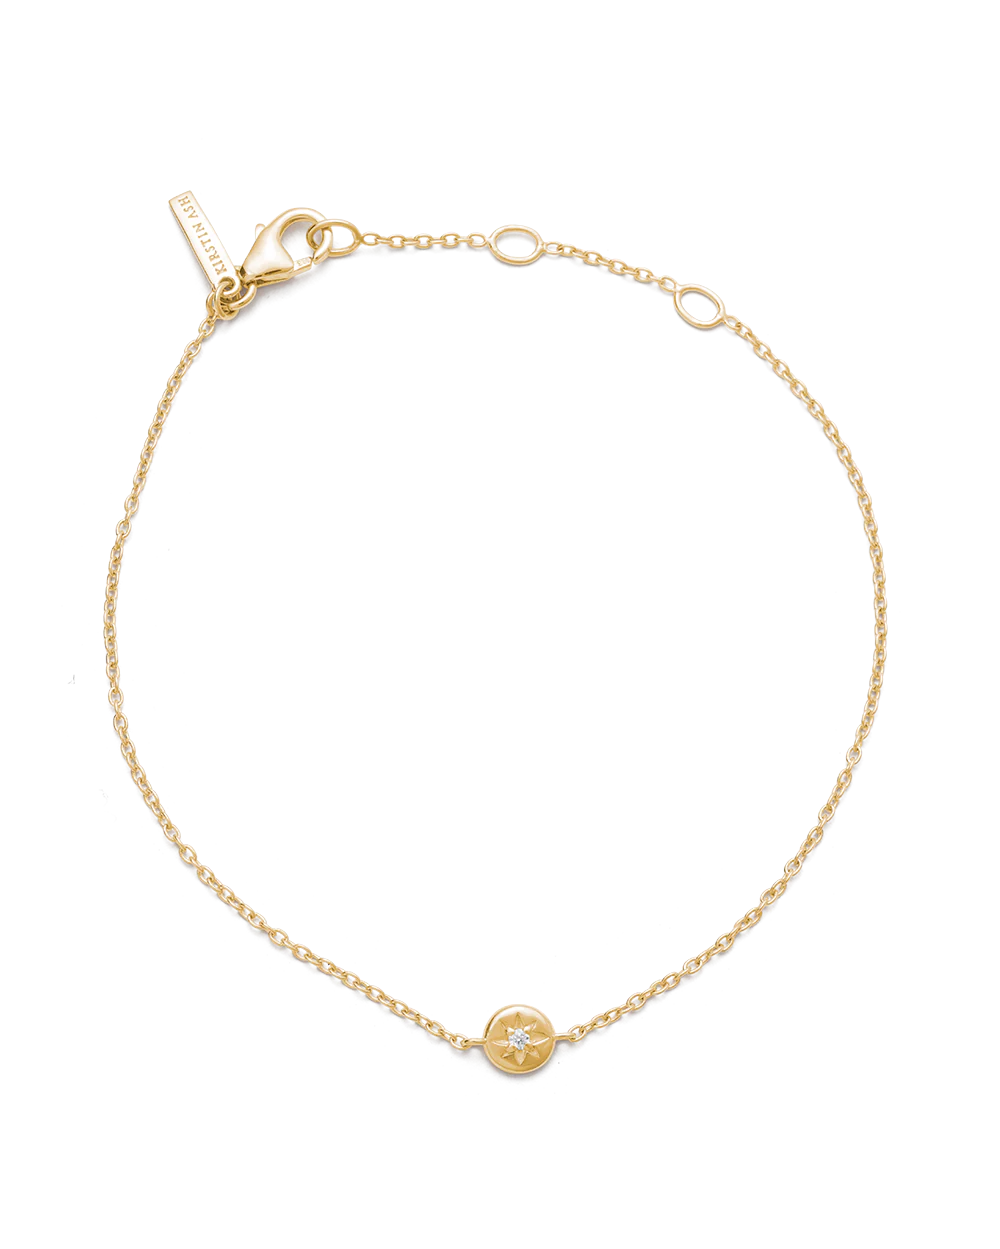 Kirstin Ash Guiding Star Bracelet- 18k gold plated